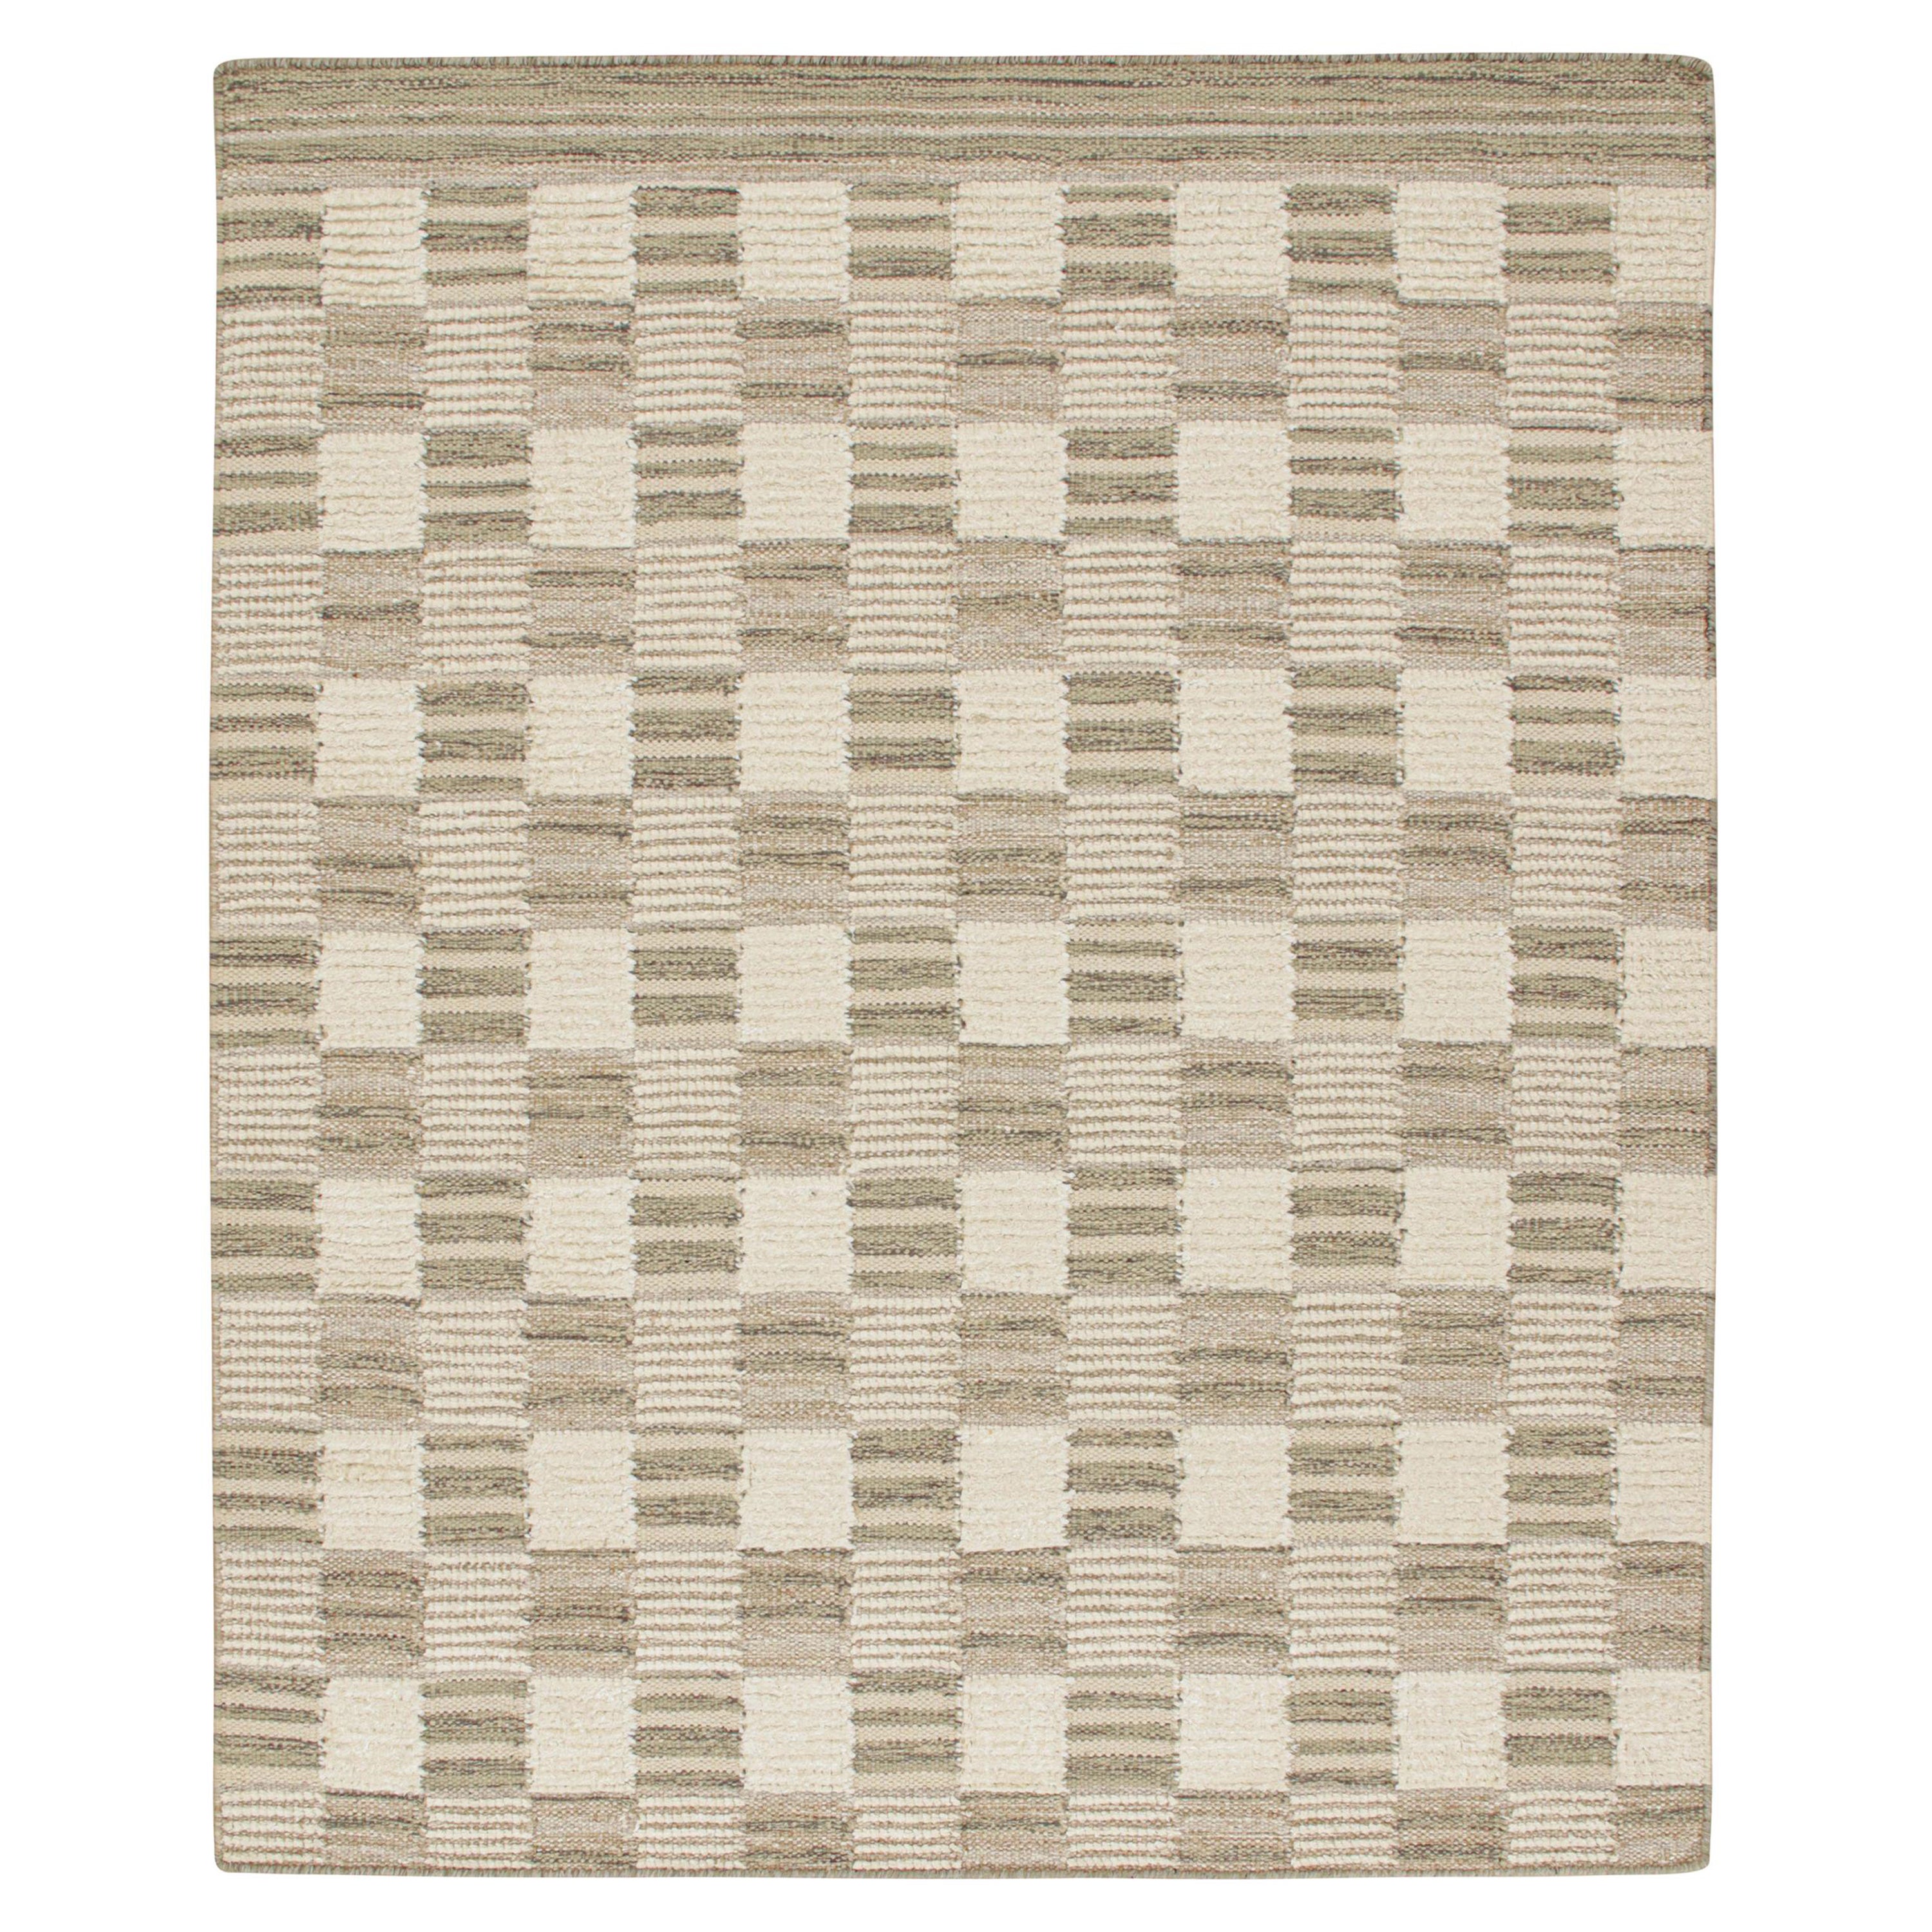 Rug & Kilim’s Scandinavian Style Kilim in Beige-Brown & White Geometric Pattern